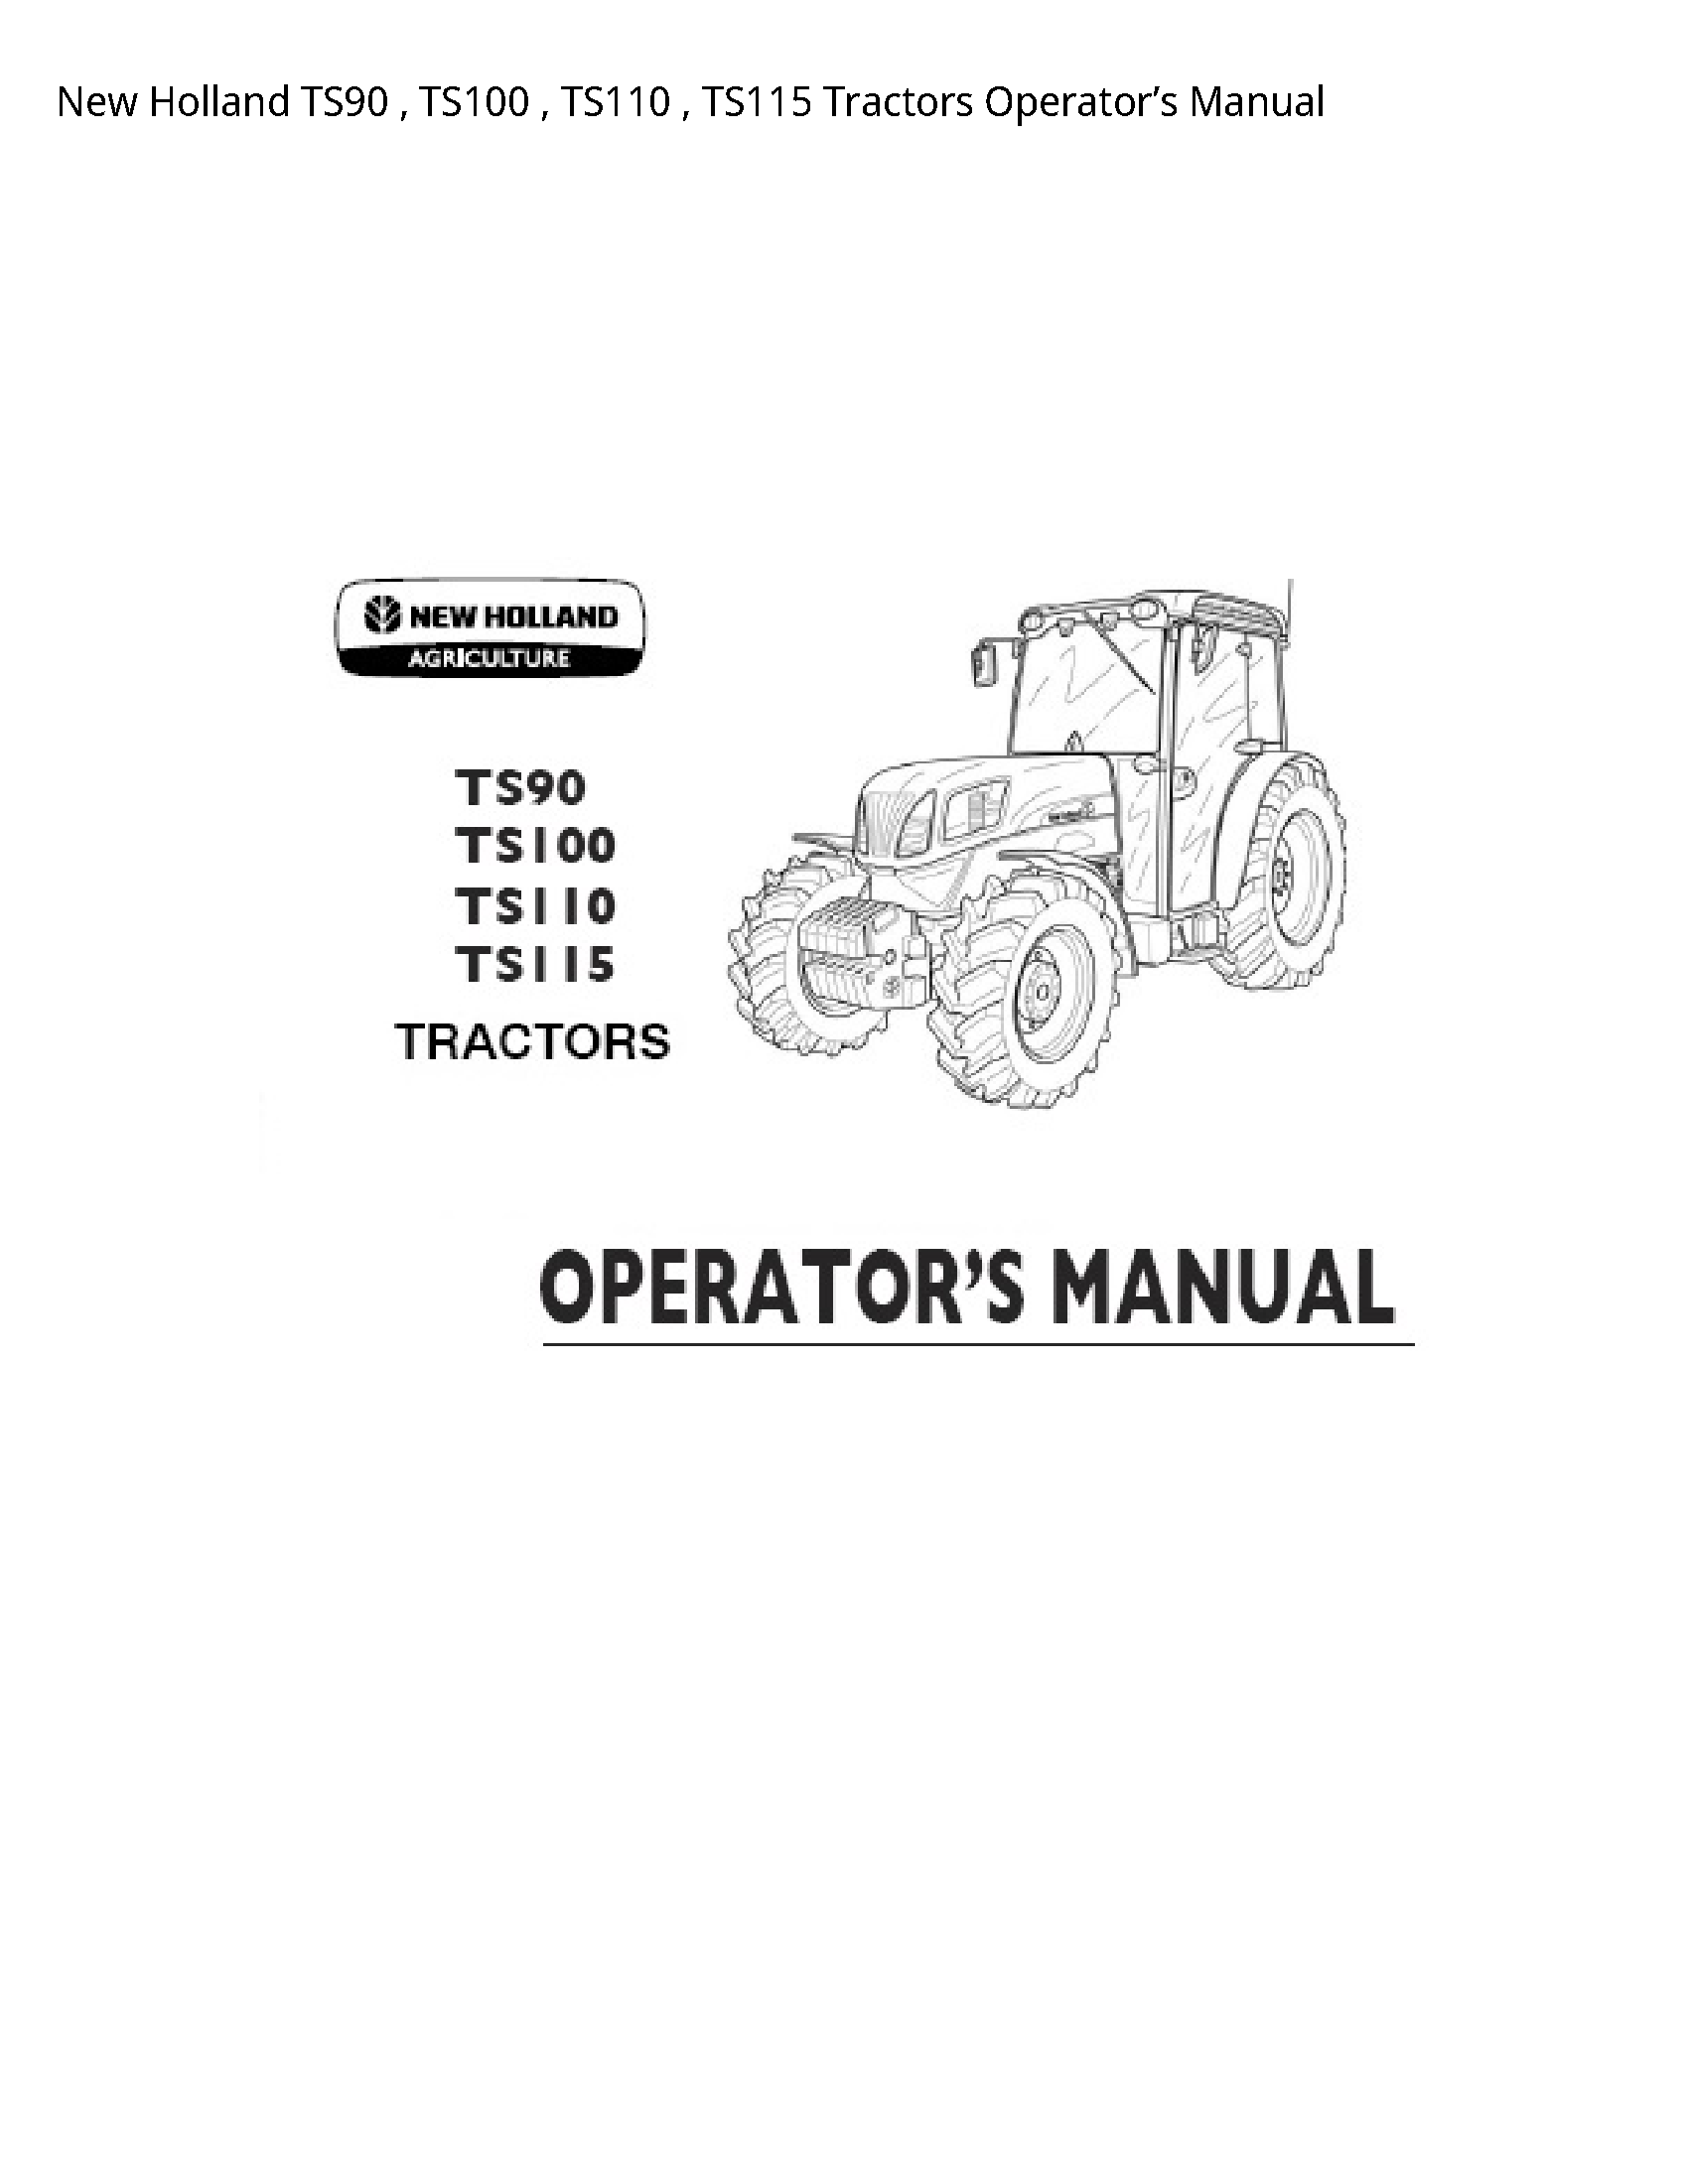 New Holland TS90 Tractors Operator’s manual